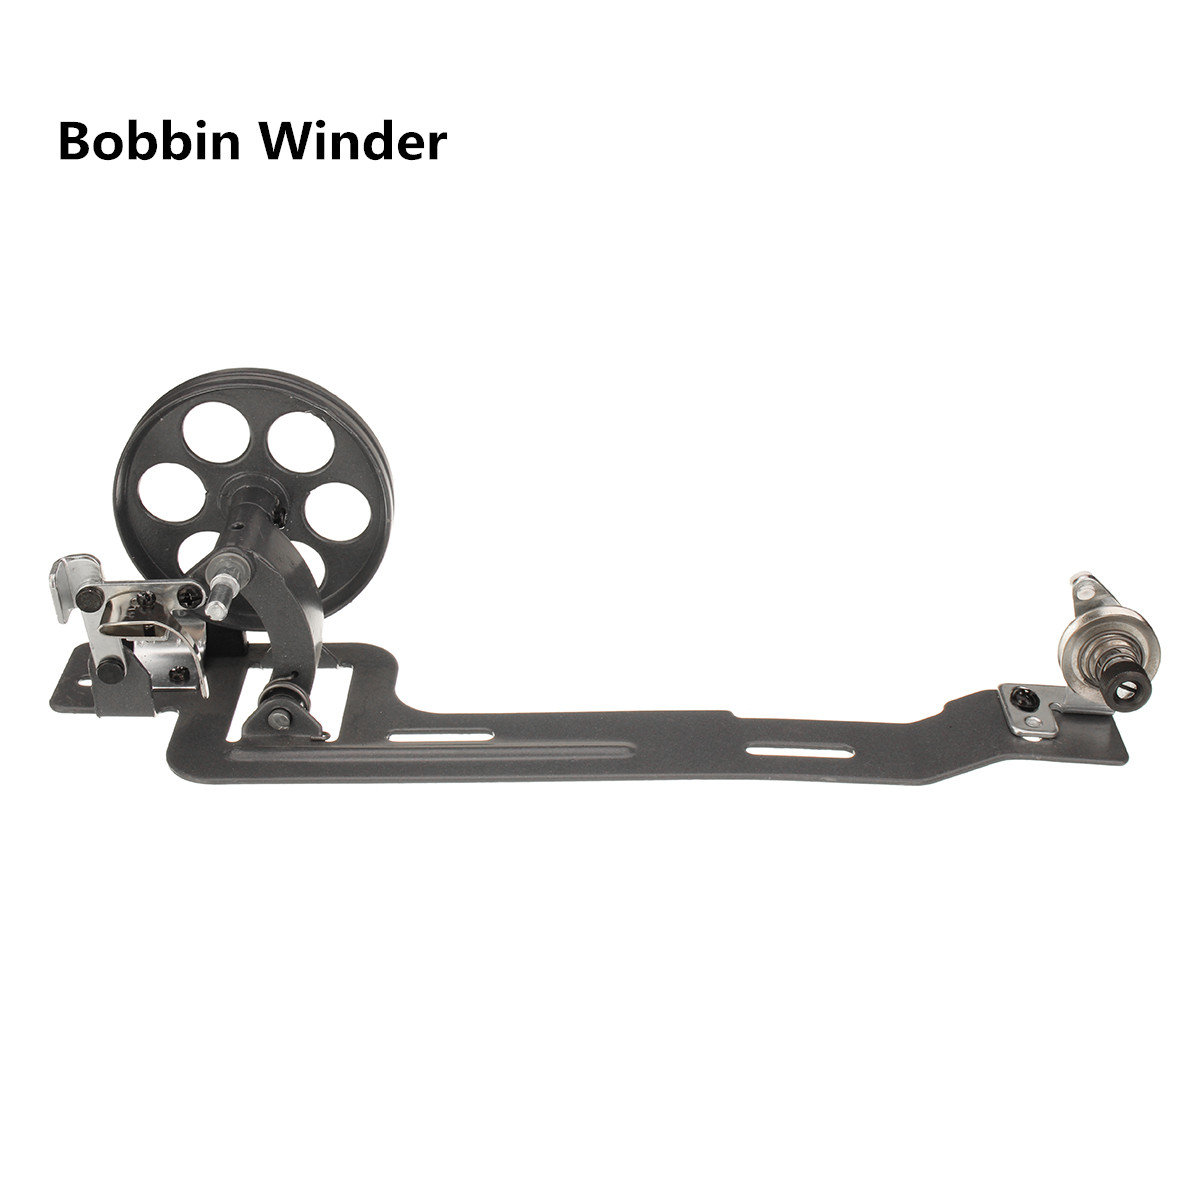 

Black Industrial Sewing Machine Bobbin Winder 3" Wheel Consew Singer For Juki Brother Etc.